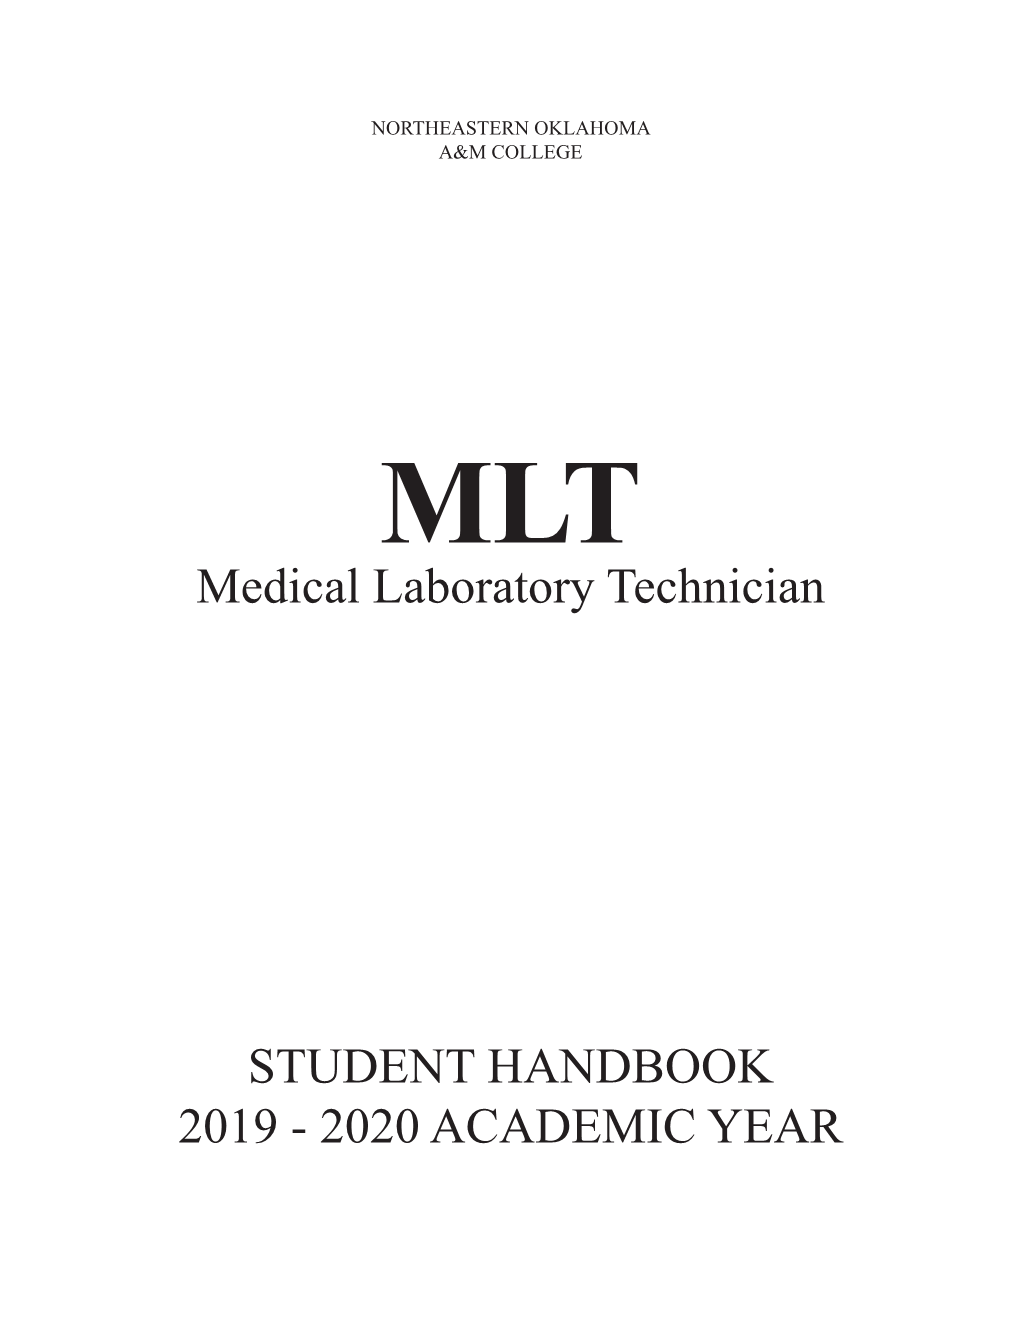 Medical Laboratory Technician STUDENT HANDBOOK 2019